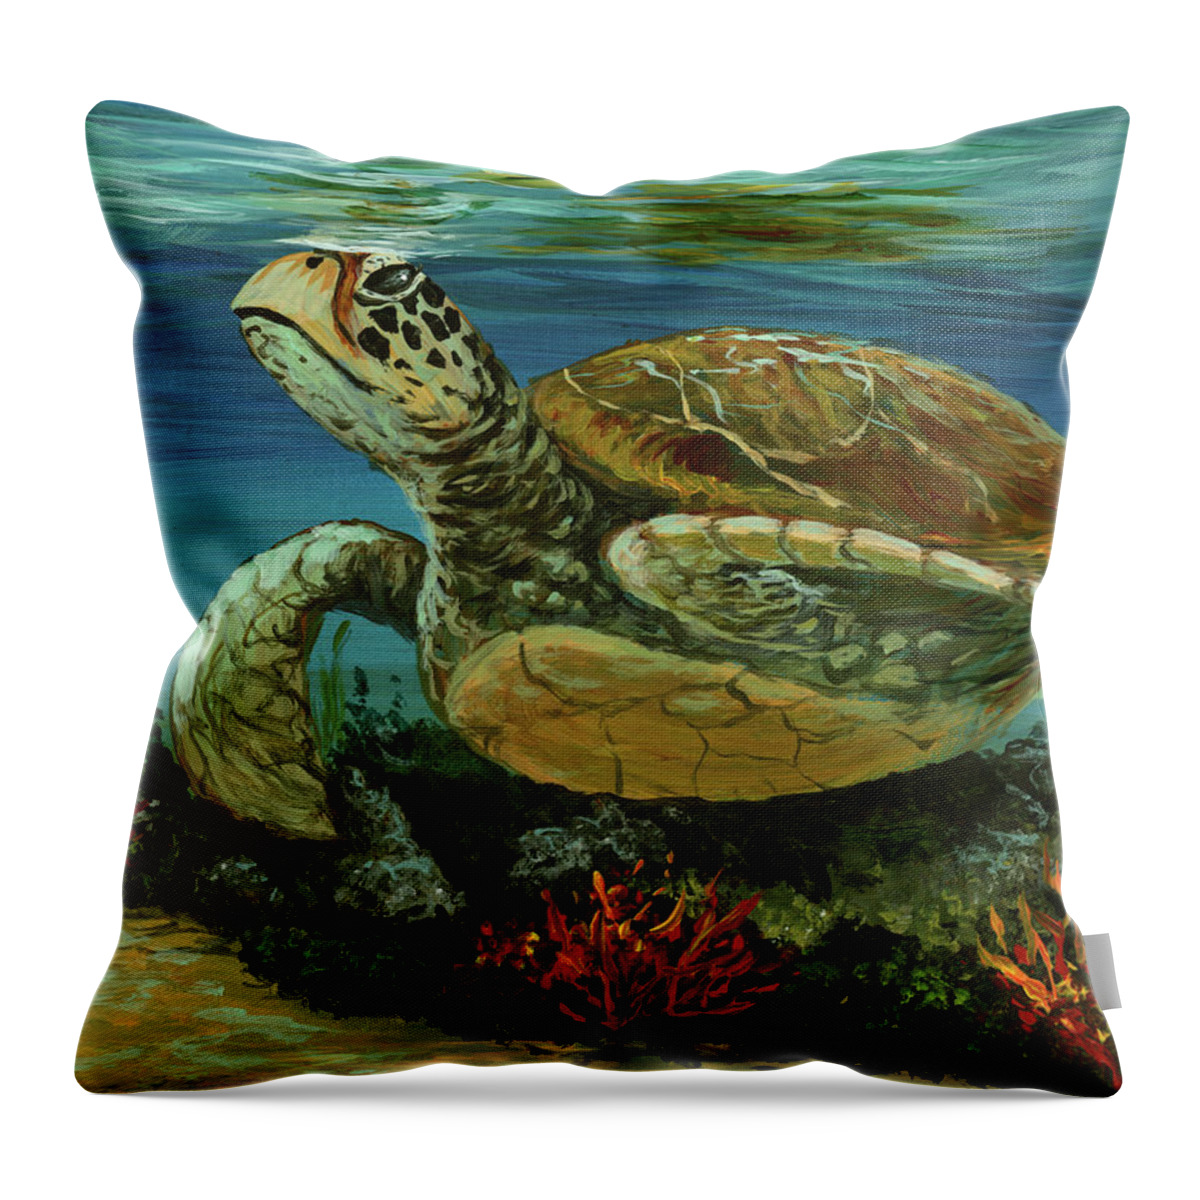 Honu Throw Pillow featuring the painting Reef Honu by Darice Machel McGuire